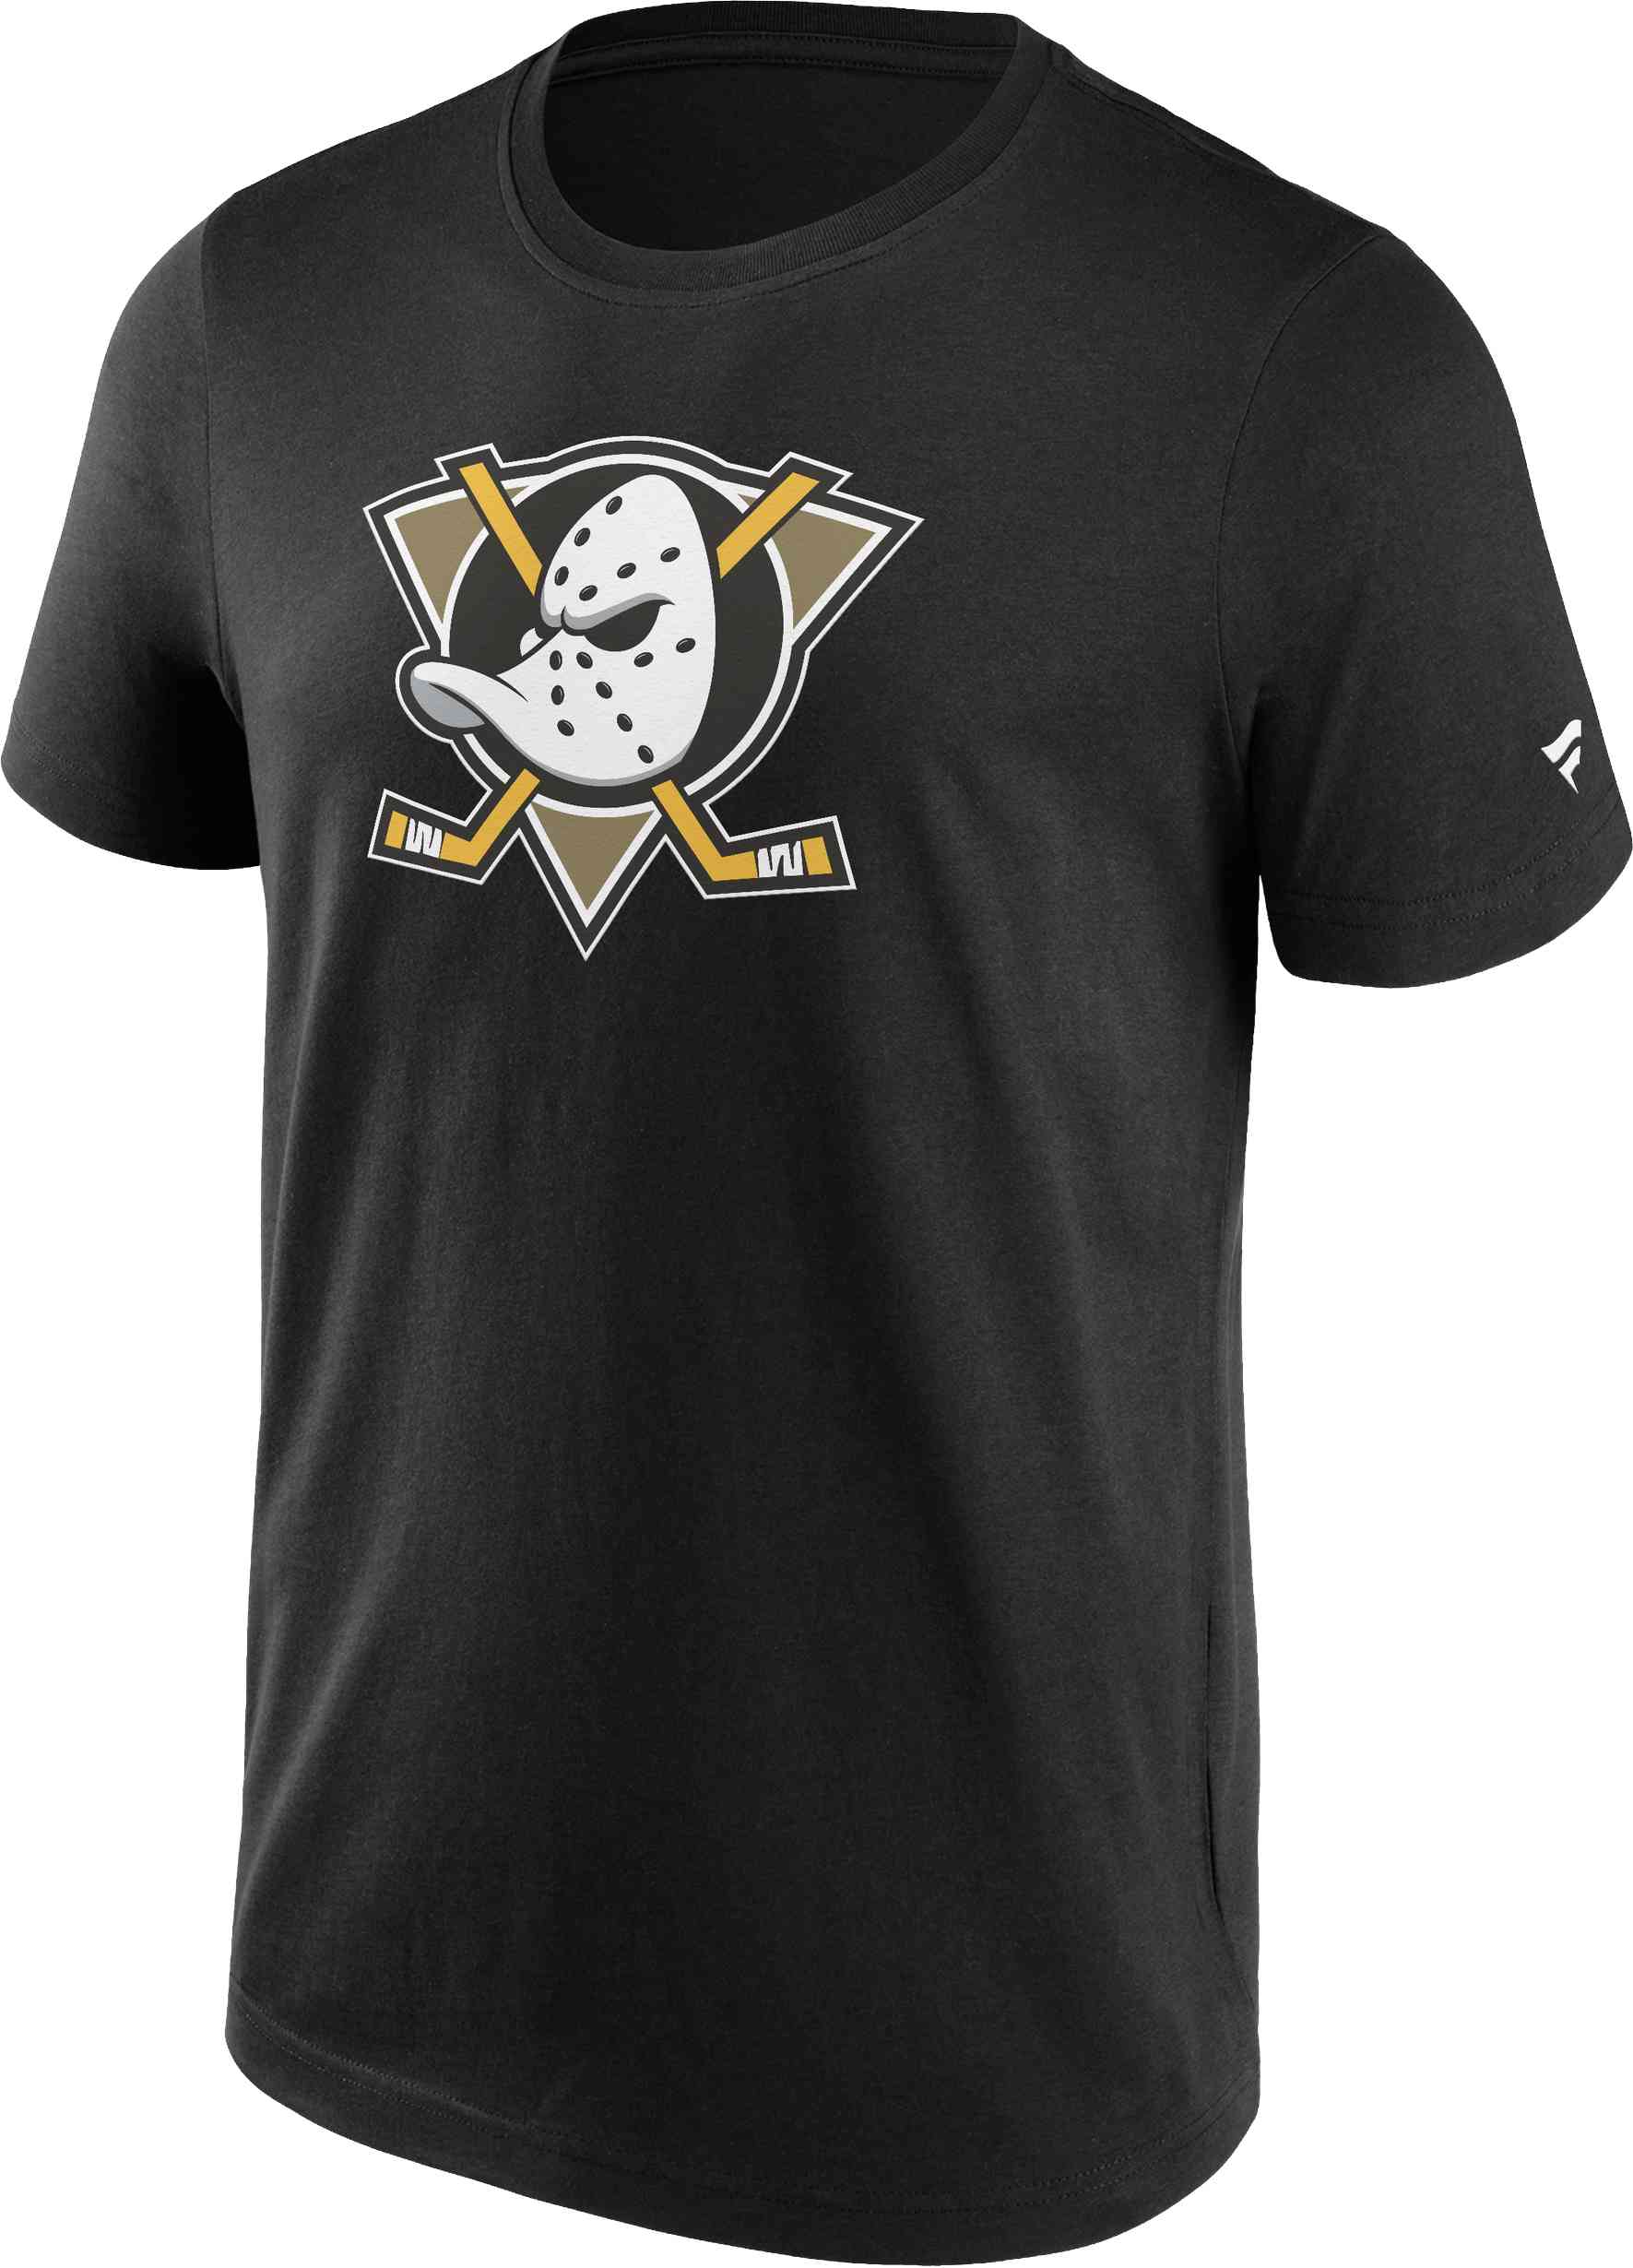 Fanatics - NFL Anaheim Ducks Primary Logo Graphic T-Shirt